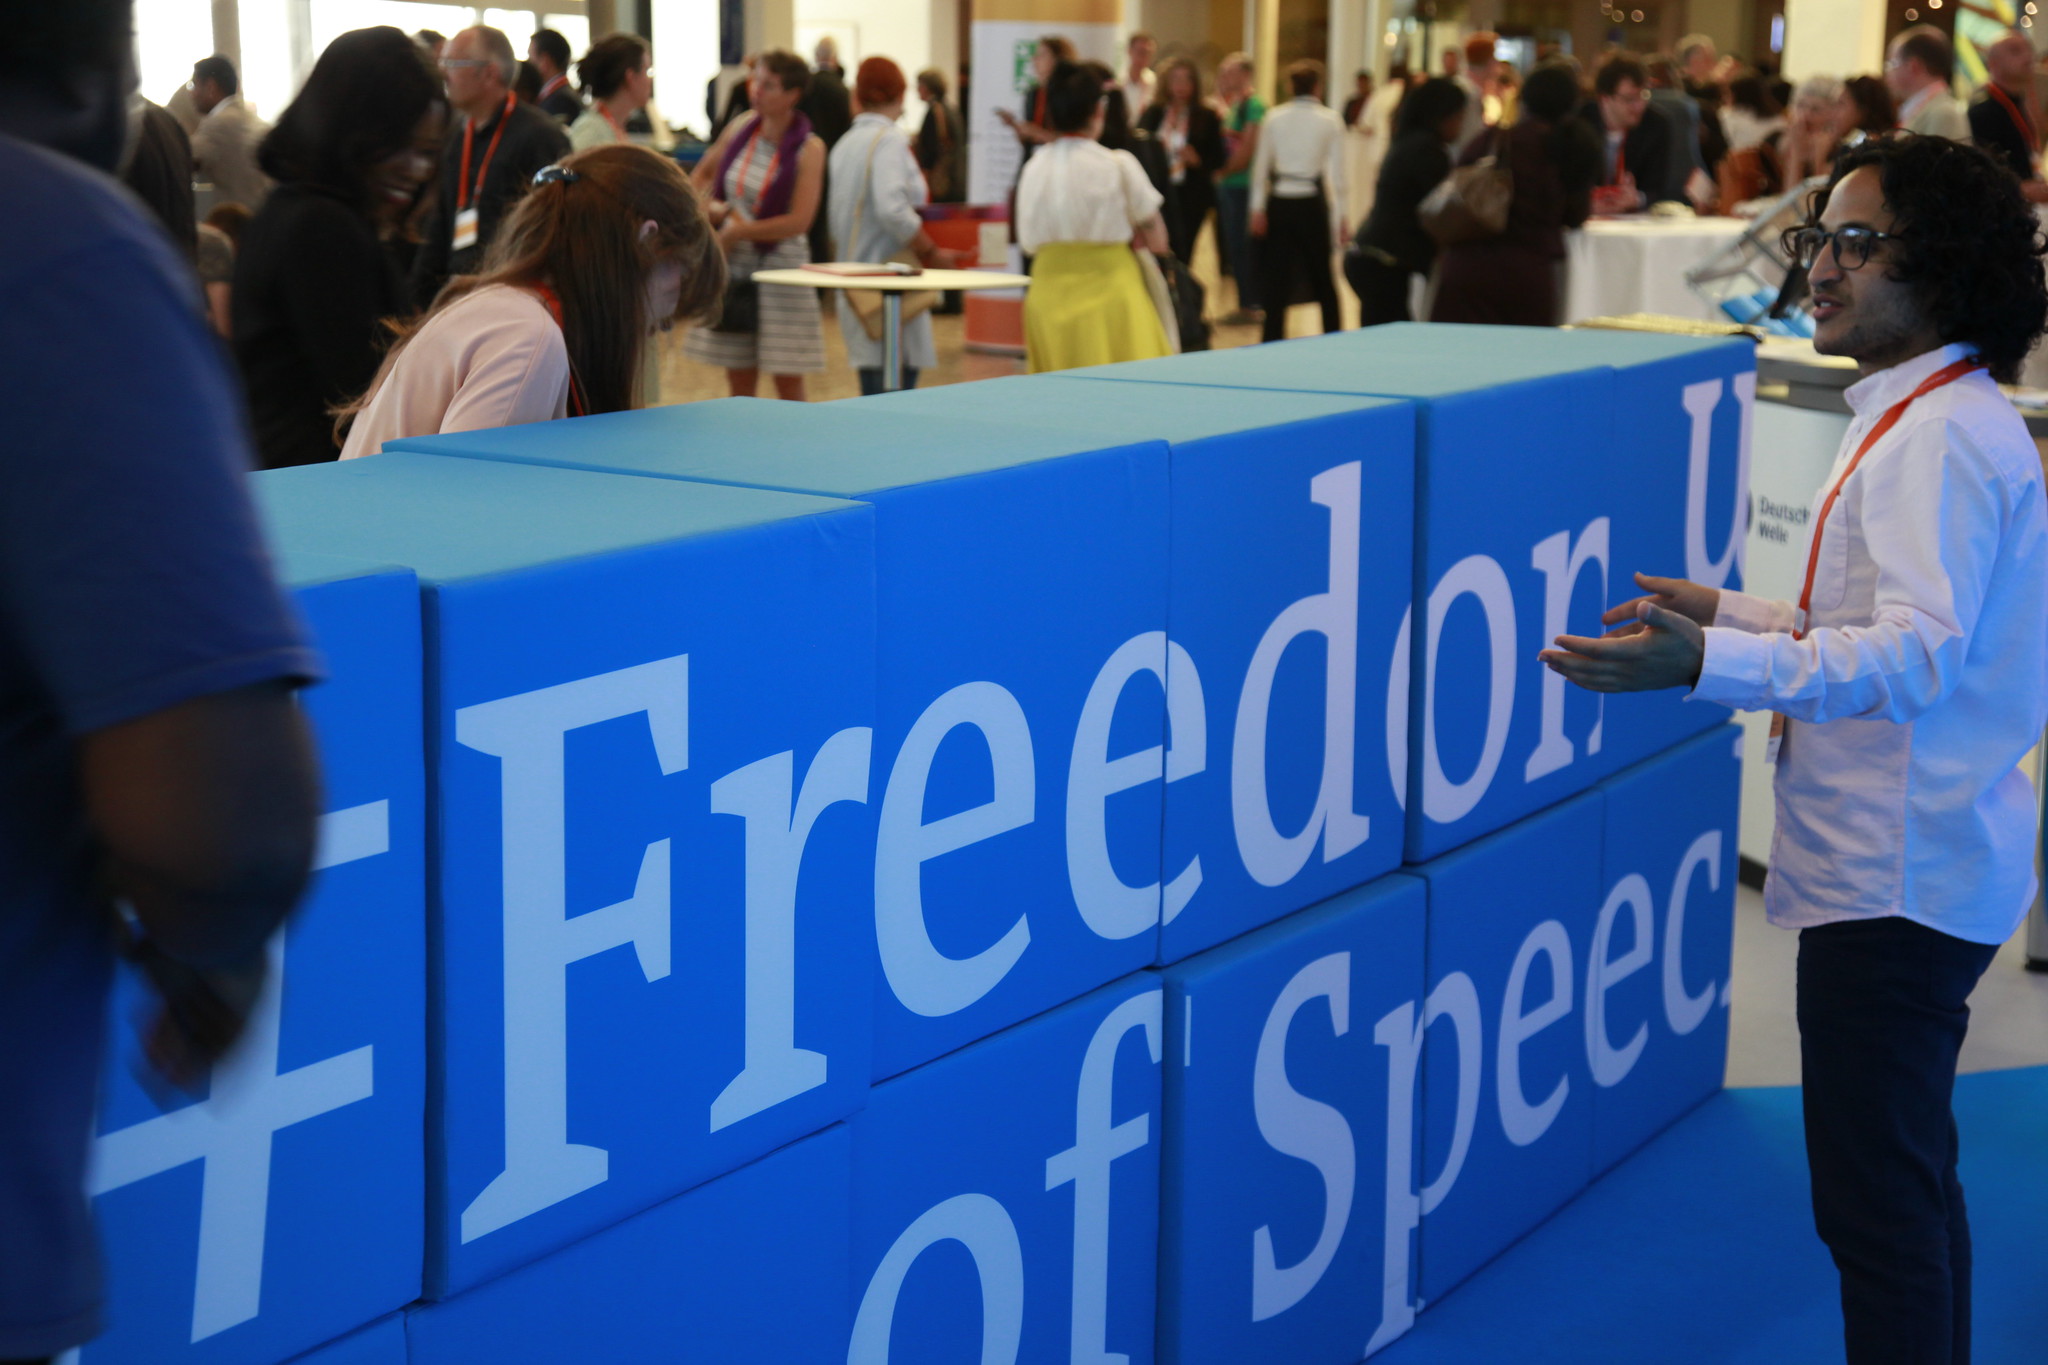 Participants for #FreedomOfSpeech, Deutsche Welle Global Media Forum 2017, June 19, 2017. (DW/S. Takato/CC BY-NC 2.0)